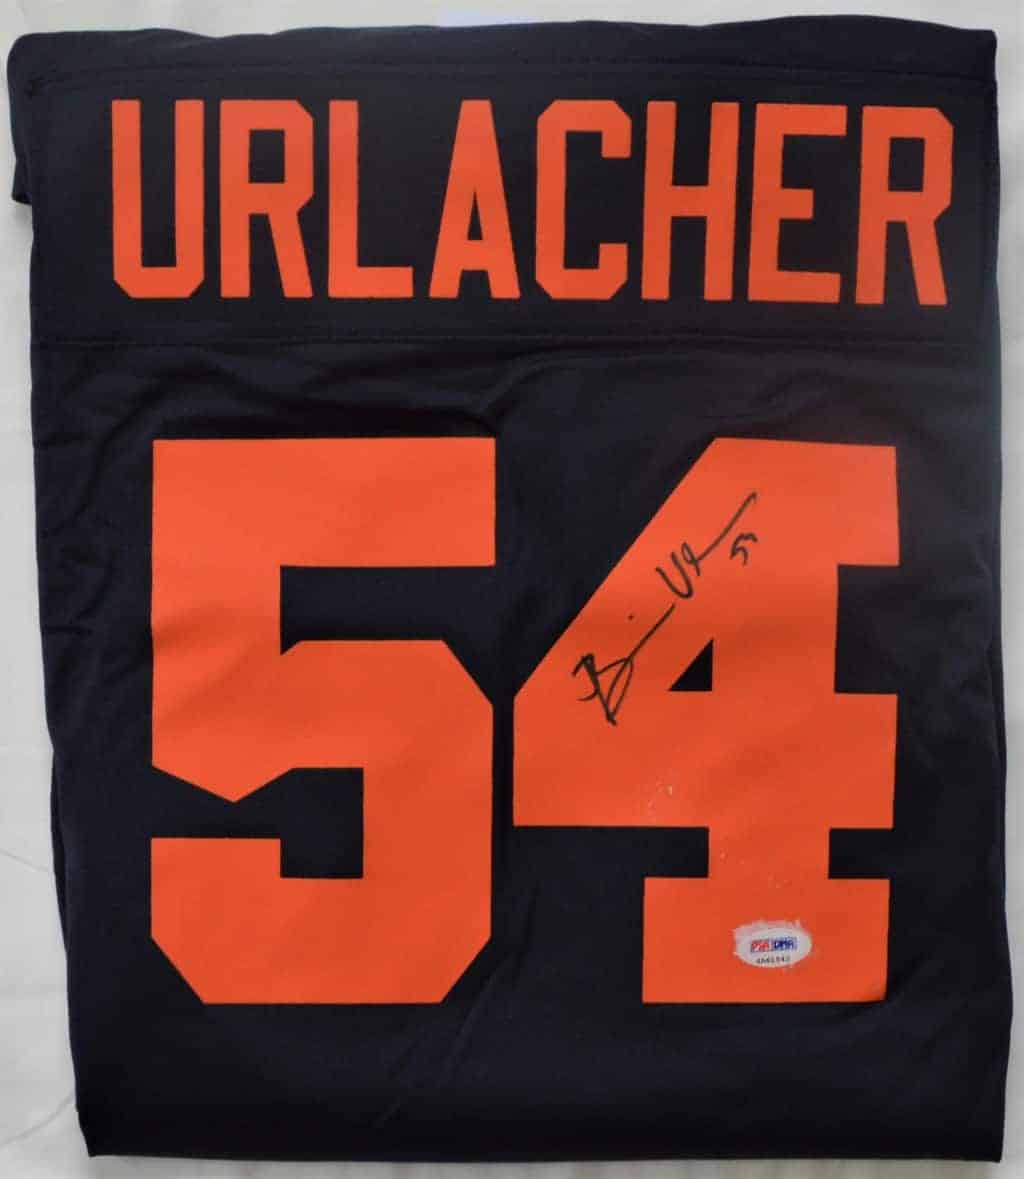 urlacher signed jersey